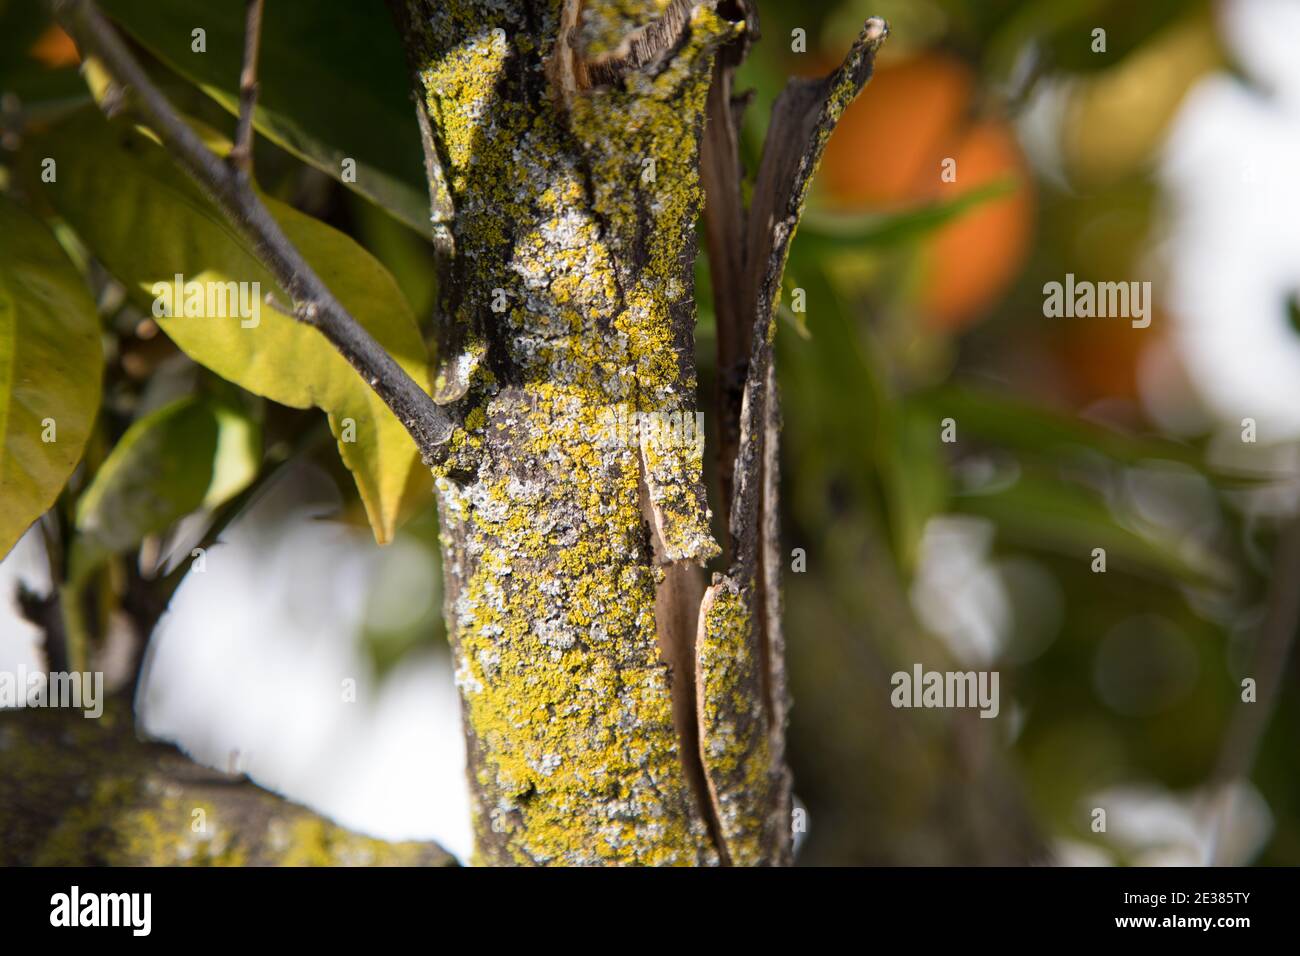 Green fungus on the bark of a tangerine tree Stock Photo